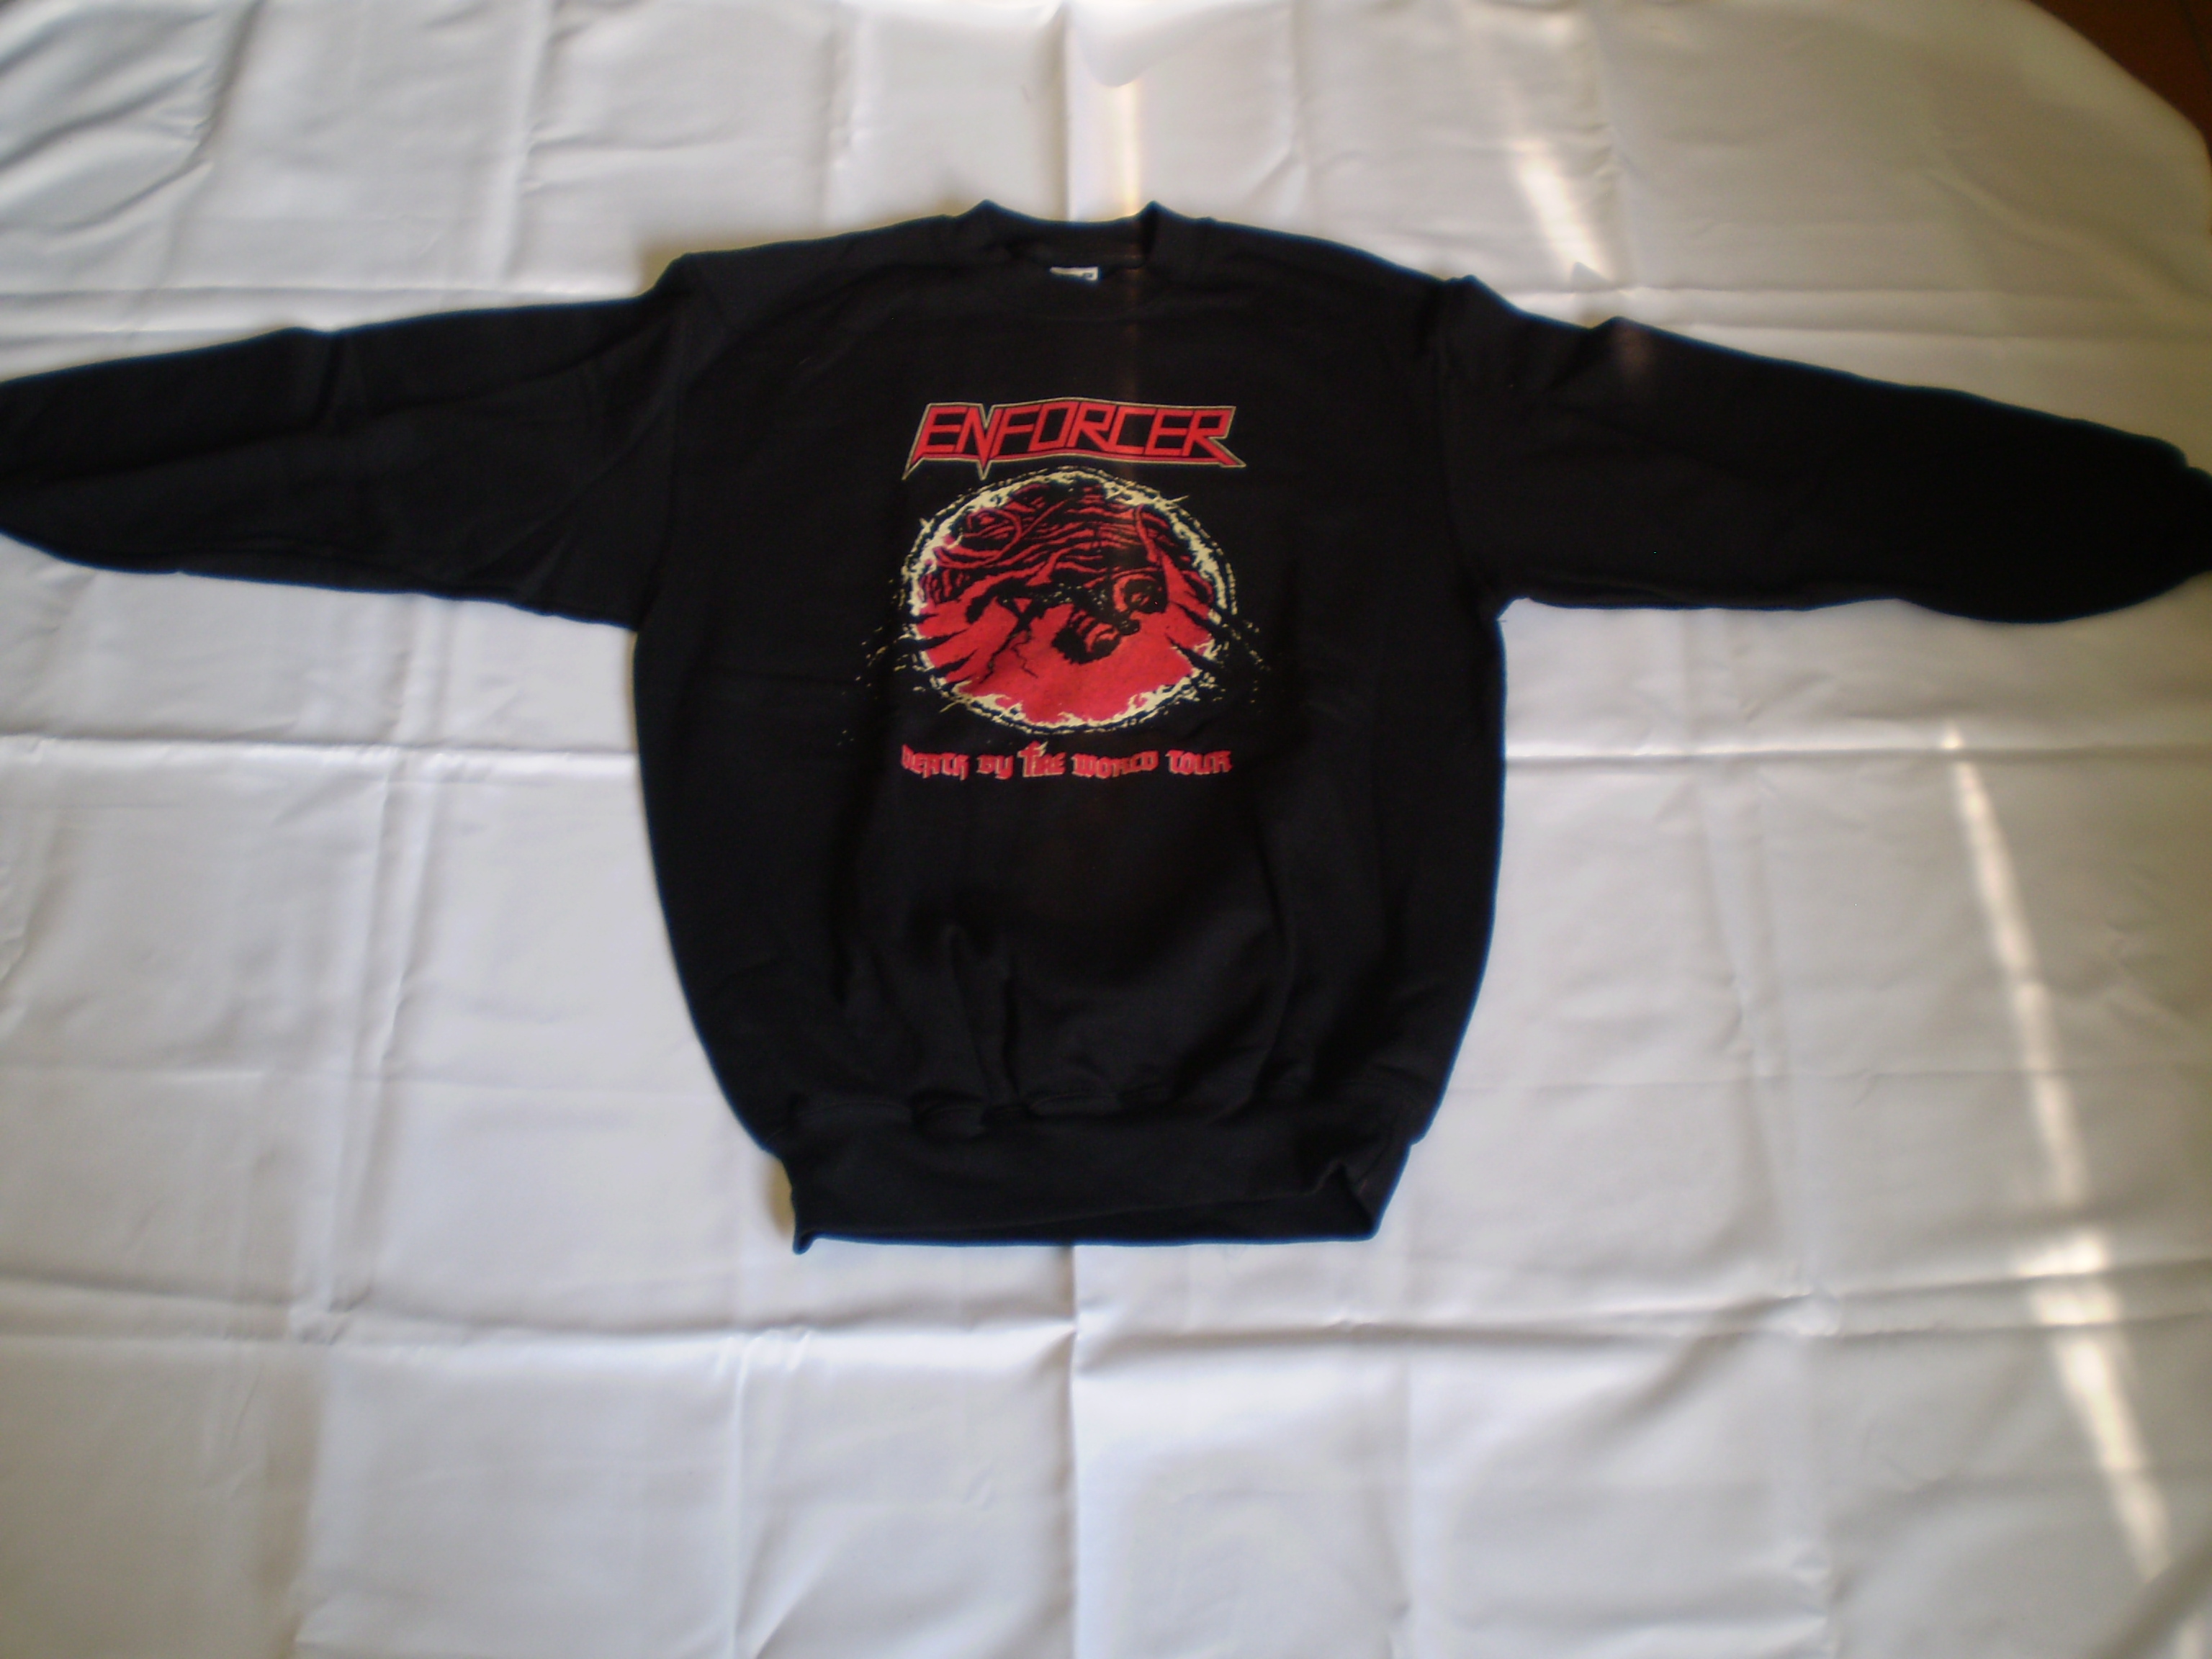 Enforcer - Death By Fire Sweat Shirt